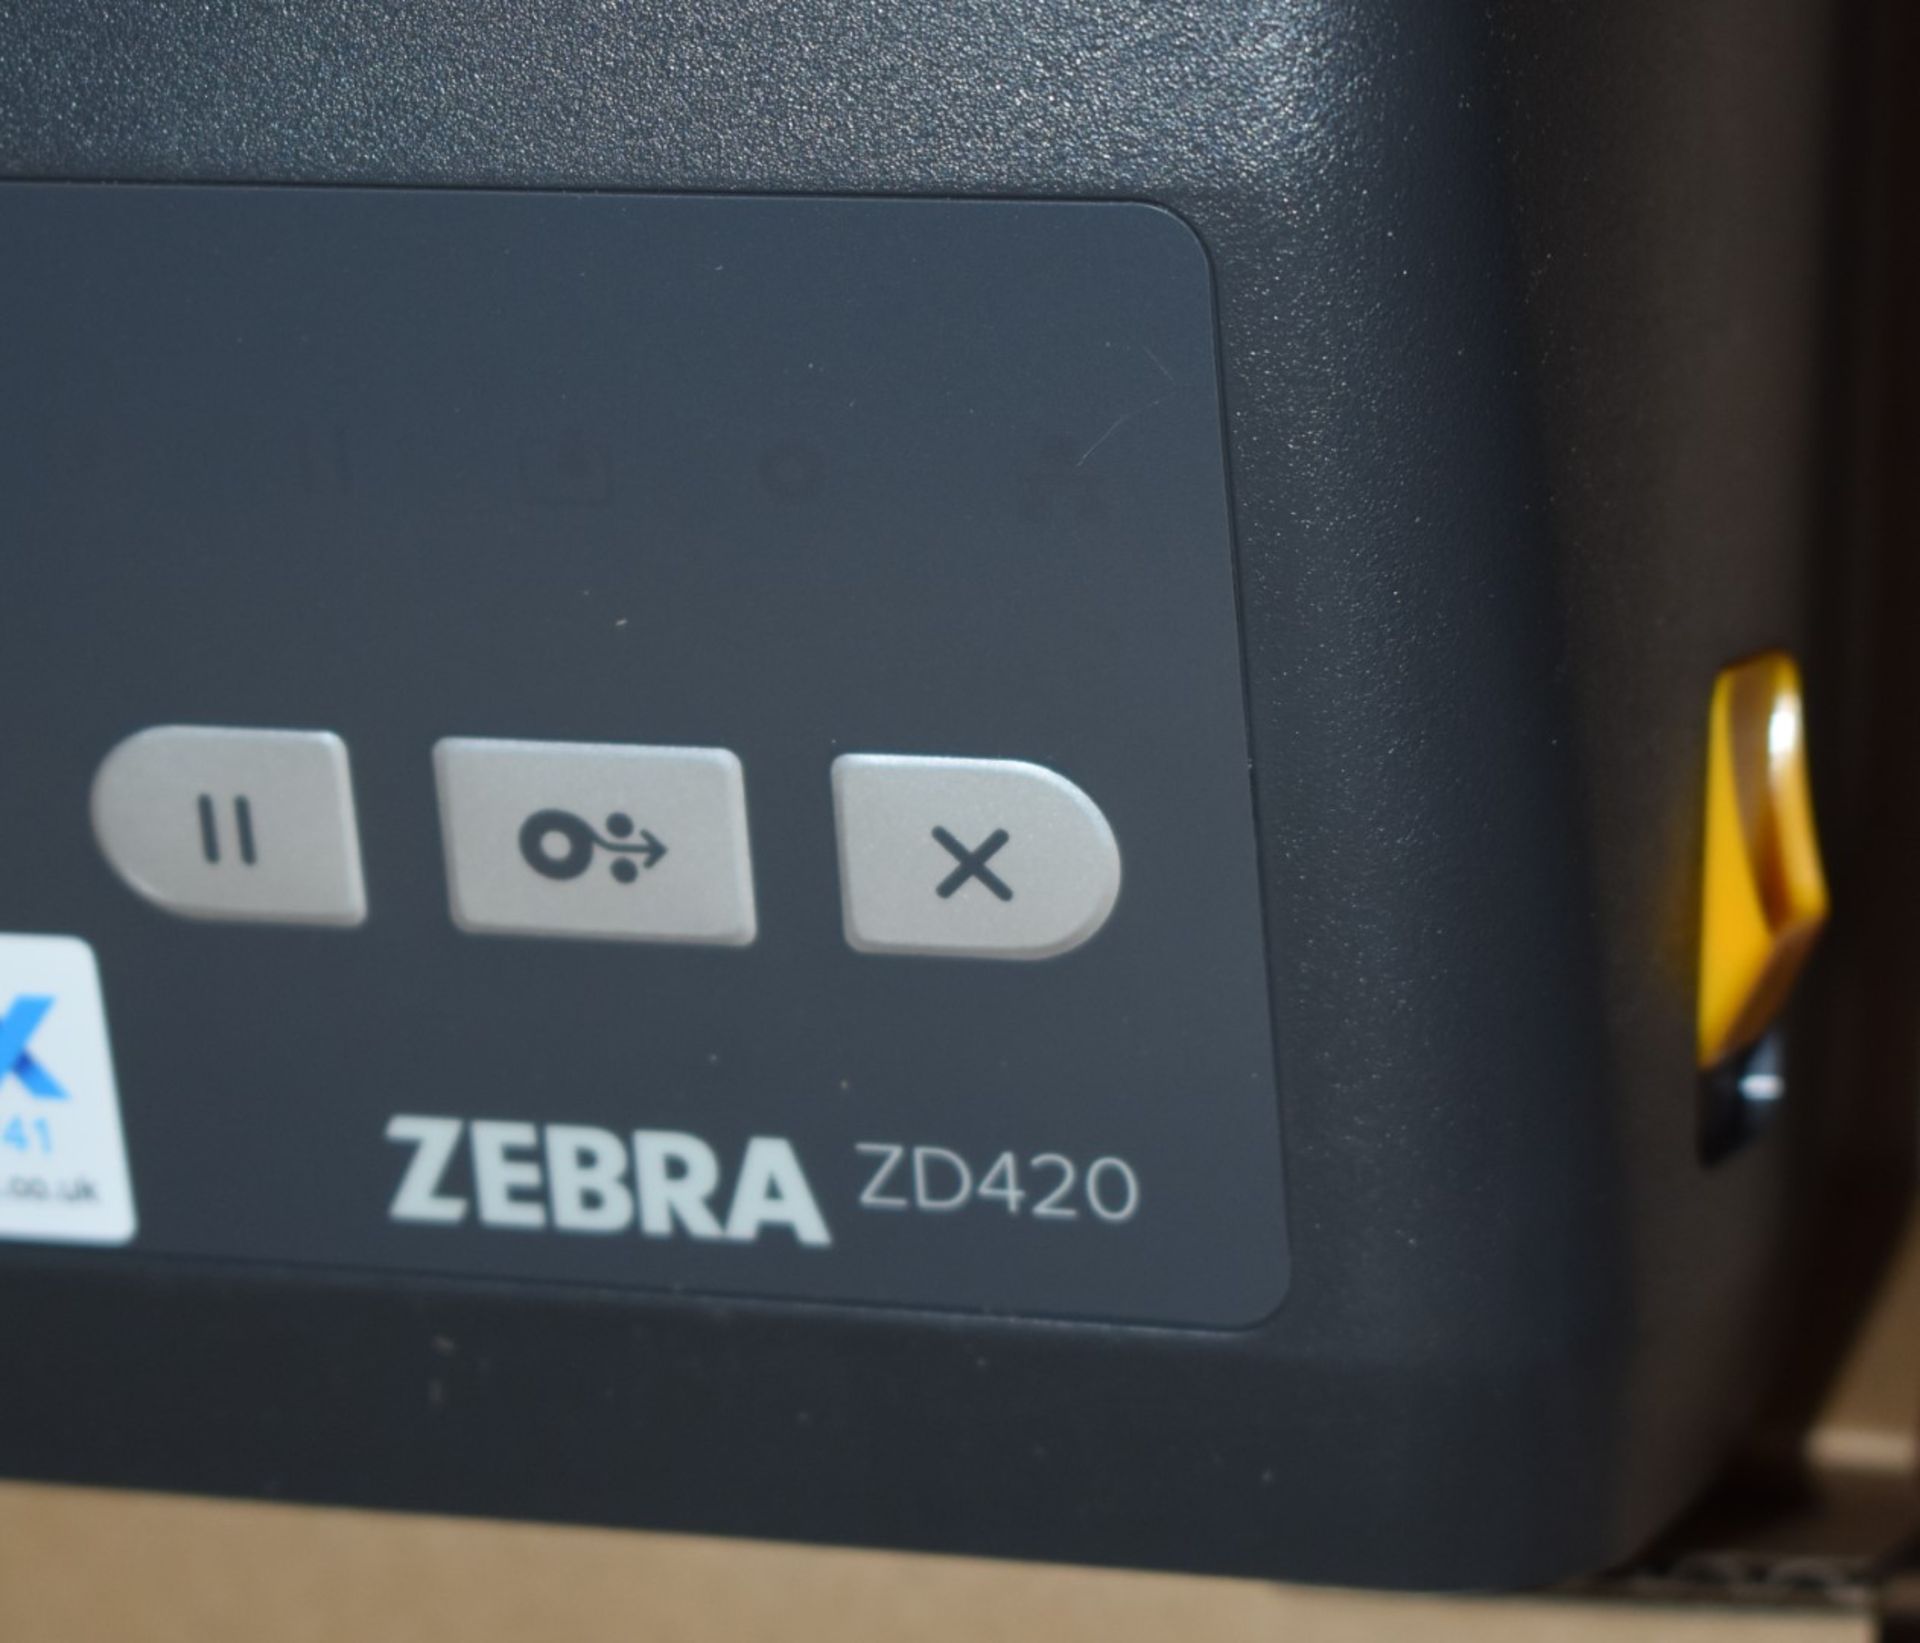 1 x Zebra ZD420 Thermal Transfer Label Printer - 203 dpi - USB and Ethernet - Unused With Original - Image 5 of 6